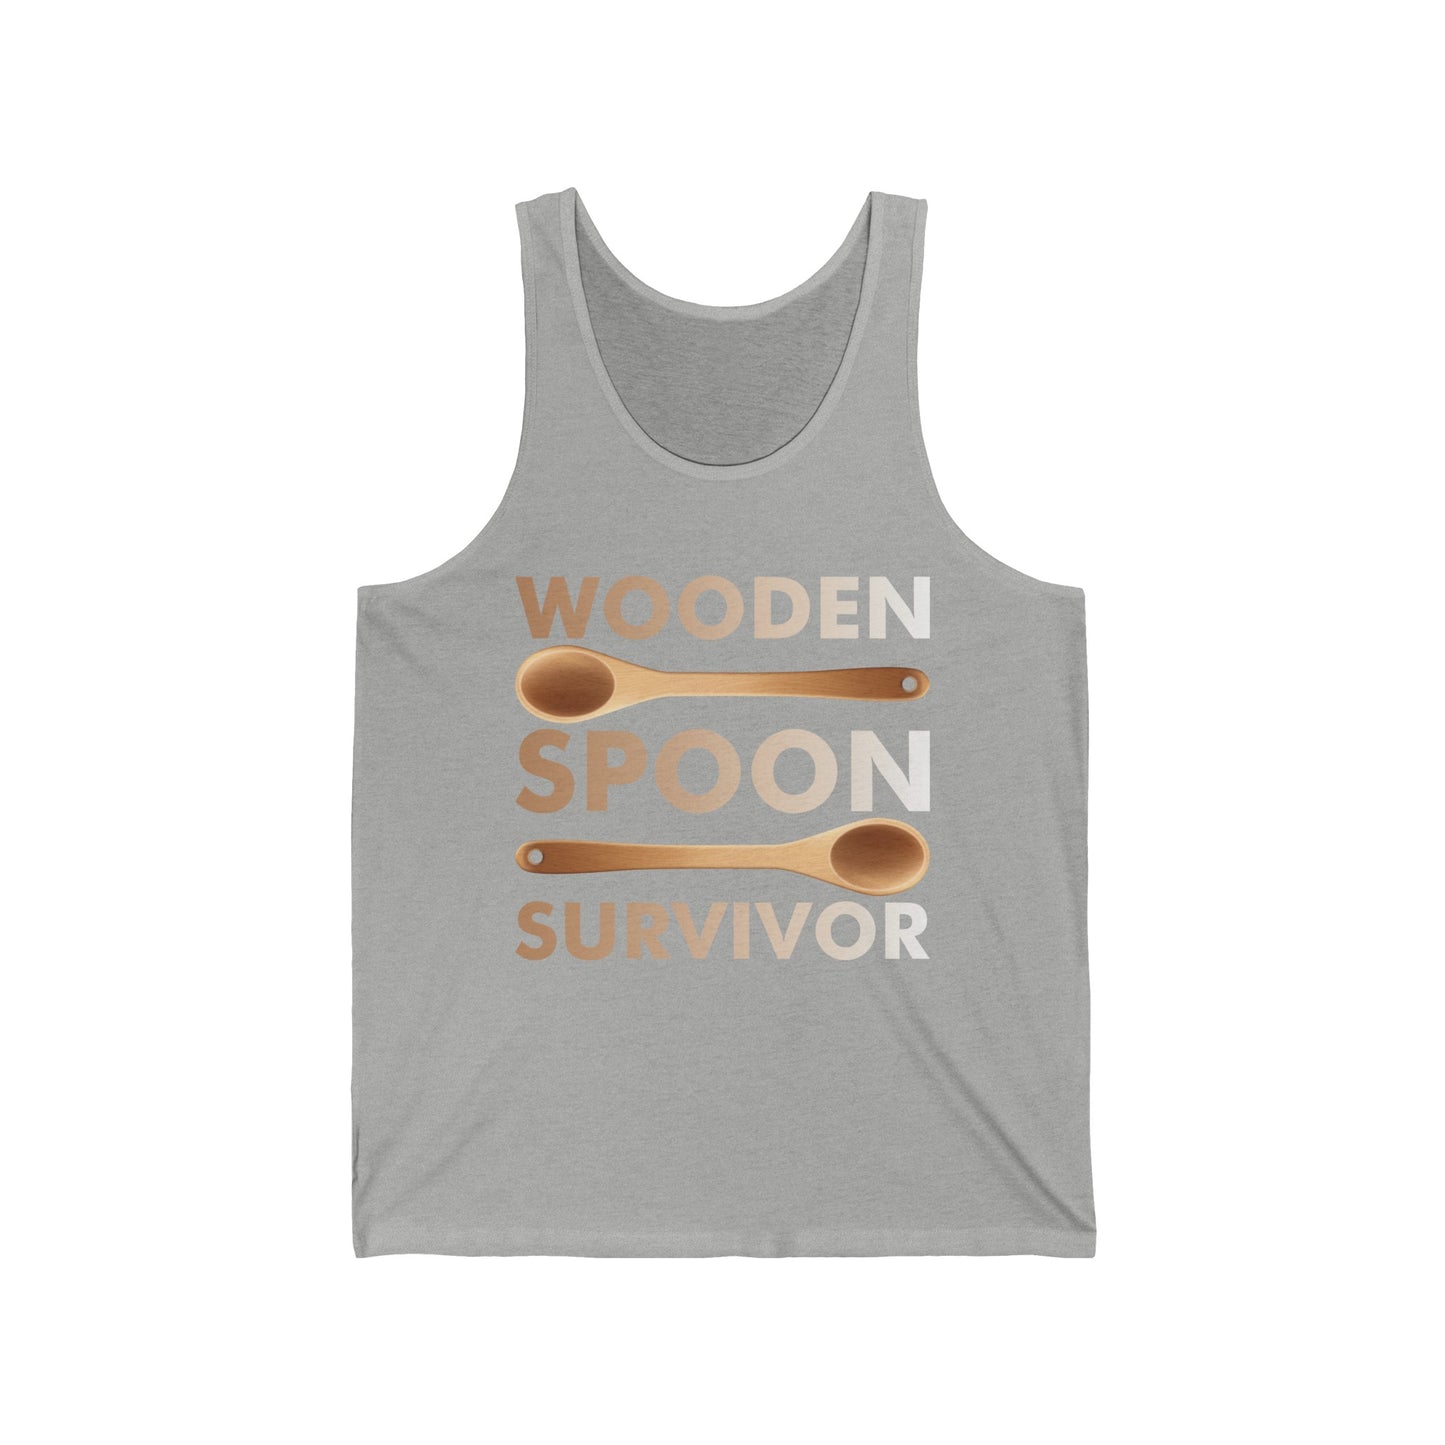 Funny Wooden Spoon Survivor Retro Novelty Sarcastic Tank Tops For Men Women